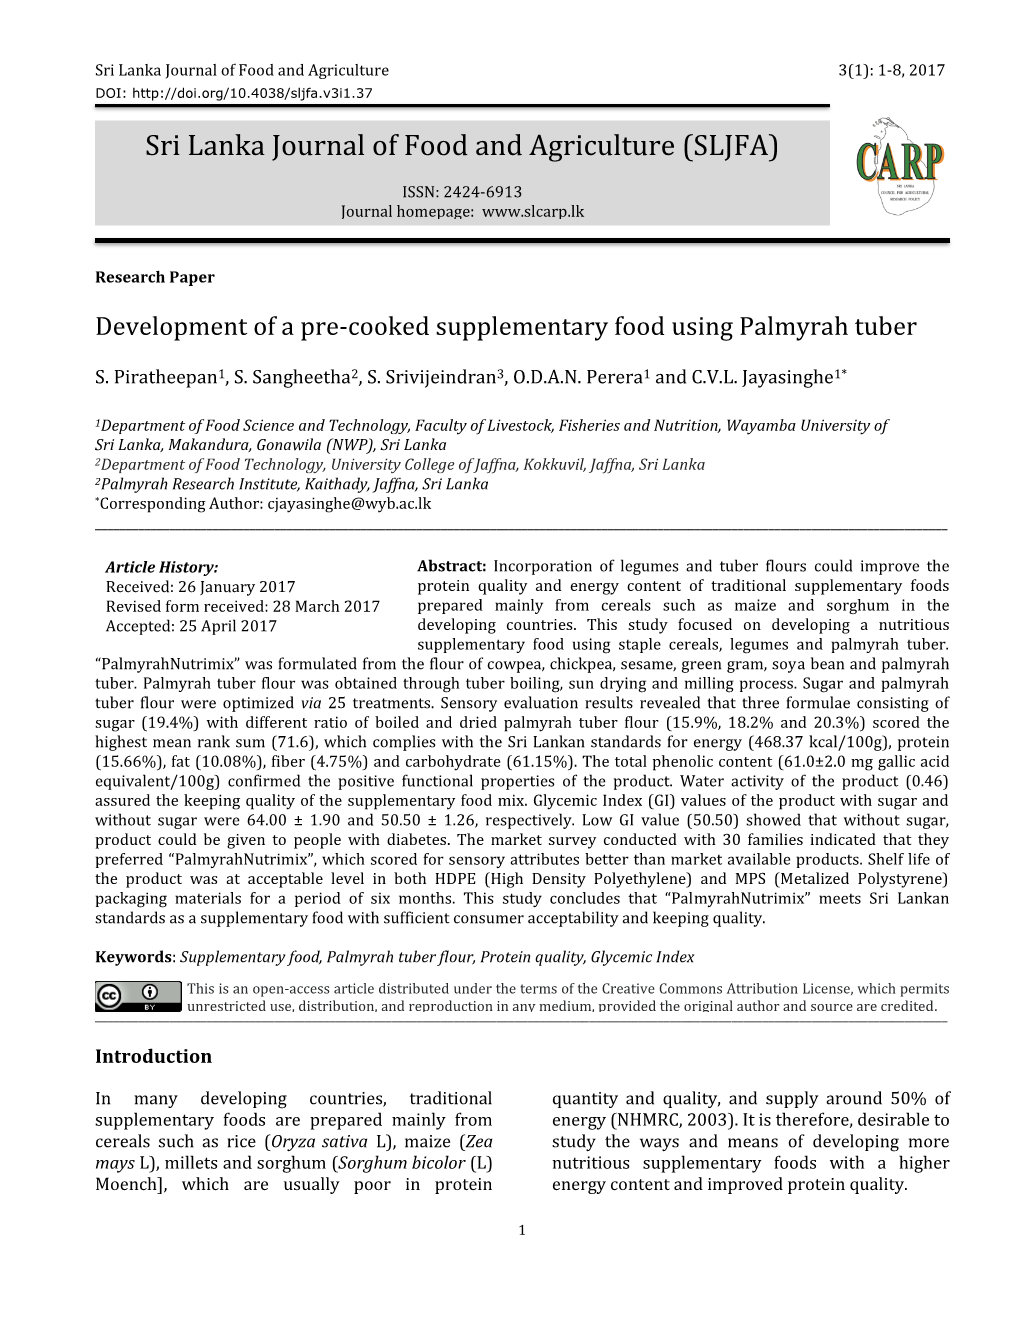 Sri Lanka Journal of Food and Agriculture (SLJFA)